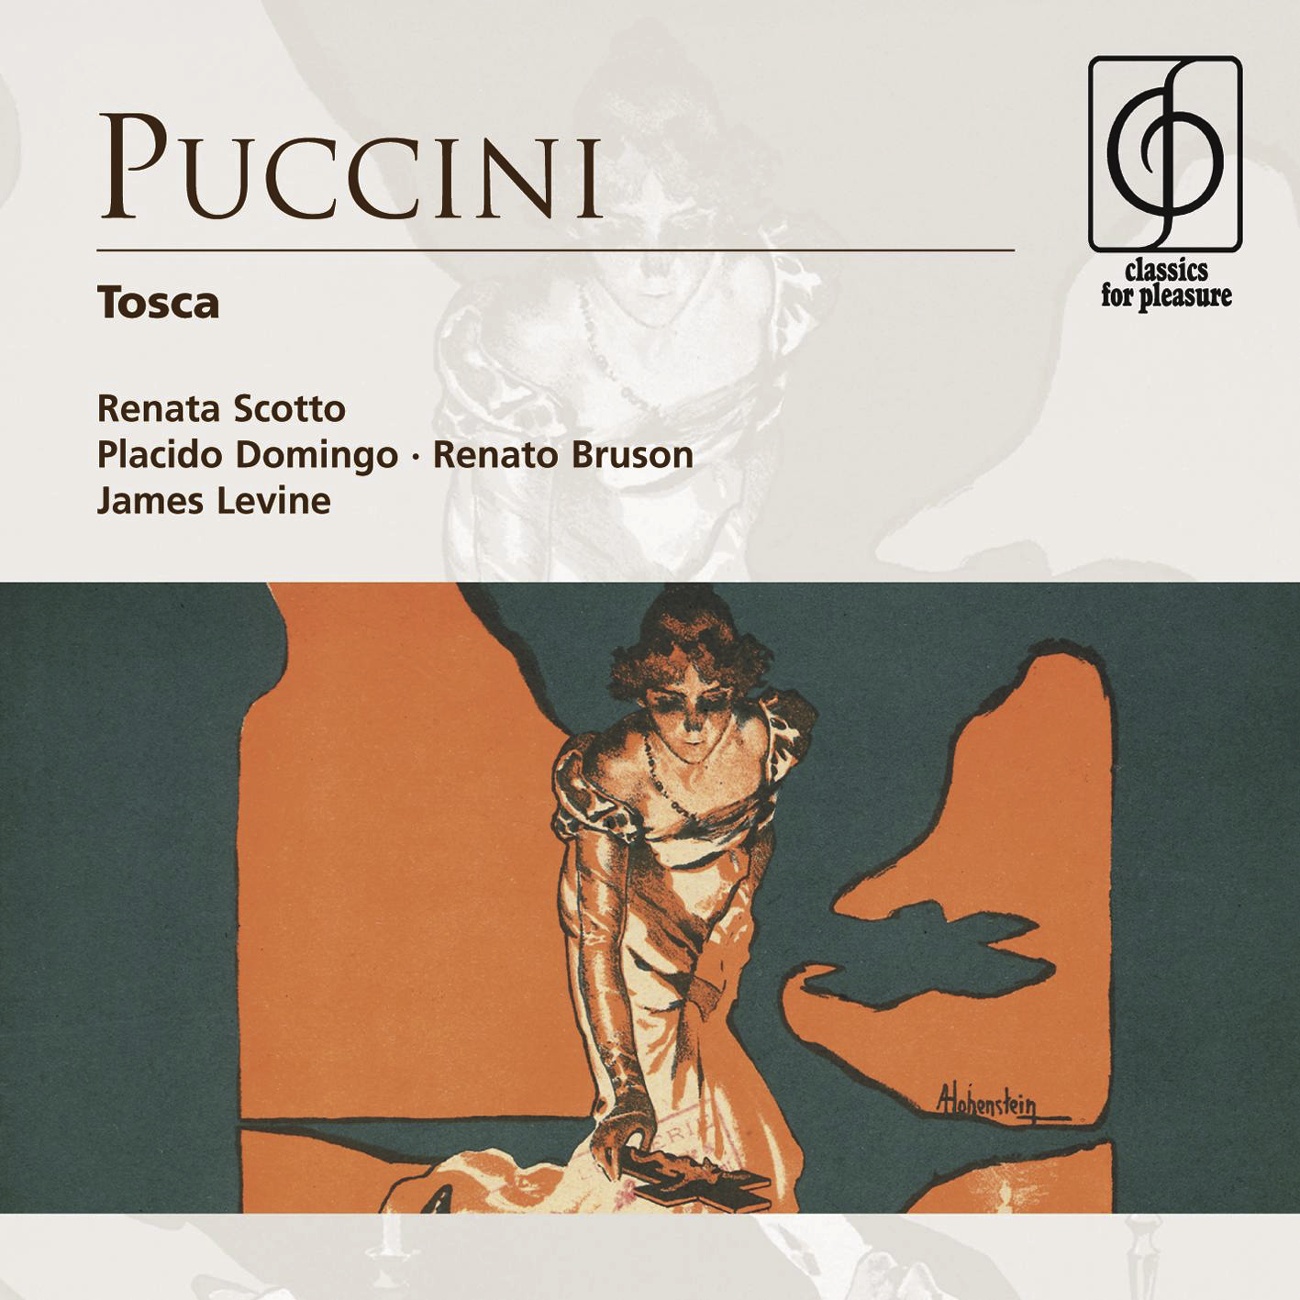 Tosca - Opera in three acts (1997 Digital Remaster), Act I: Dammi i colori...Recondita armonia (Cavaradossi, Sacristan)